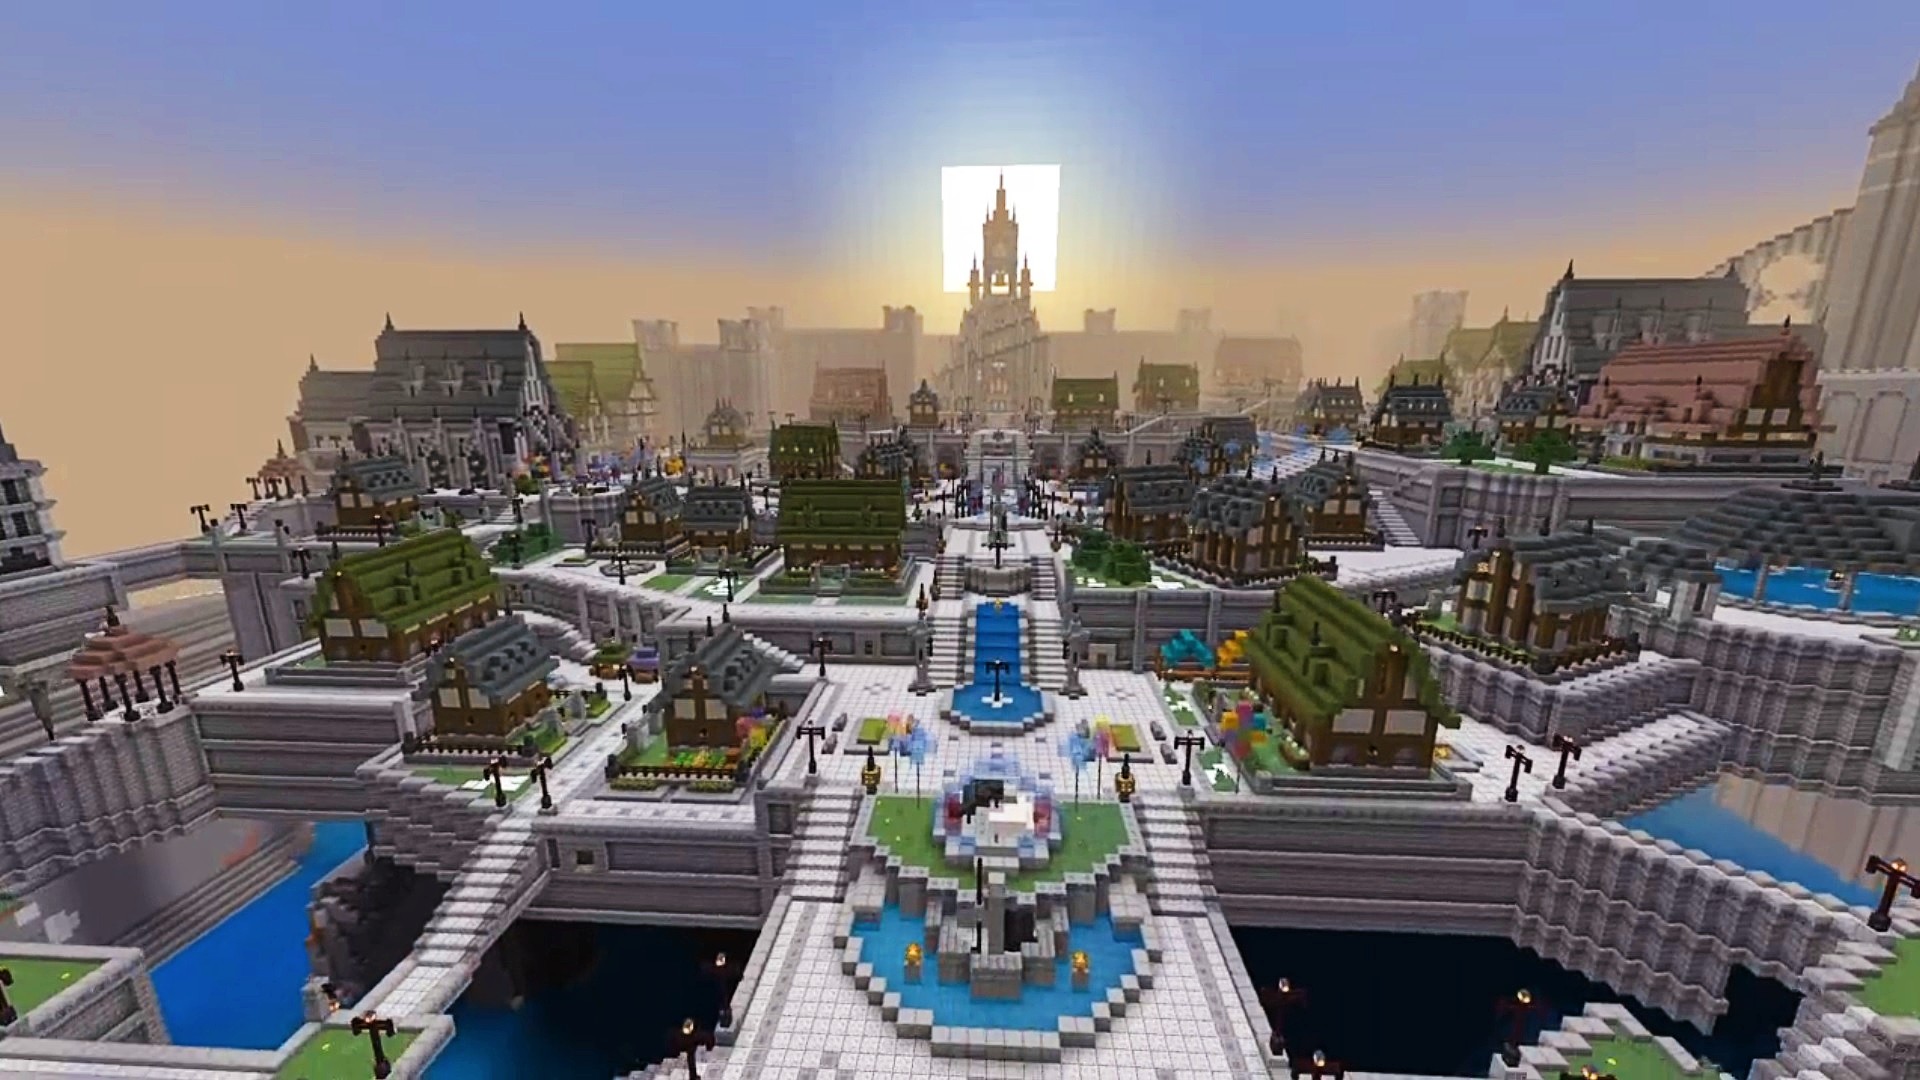 Minecraft build provides alternative to latest FFXIV housing crisis